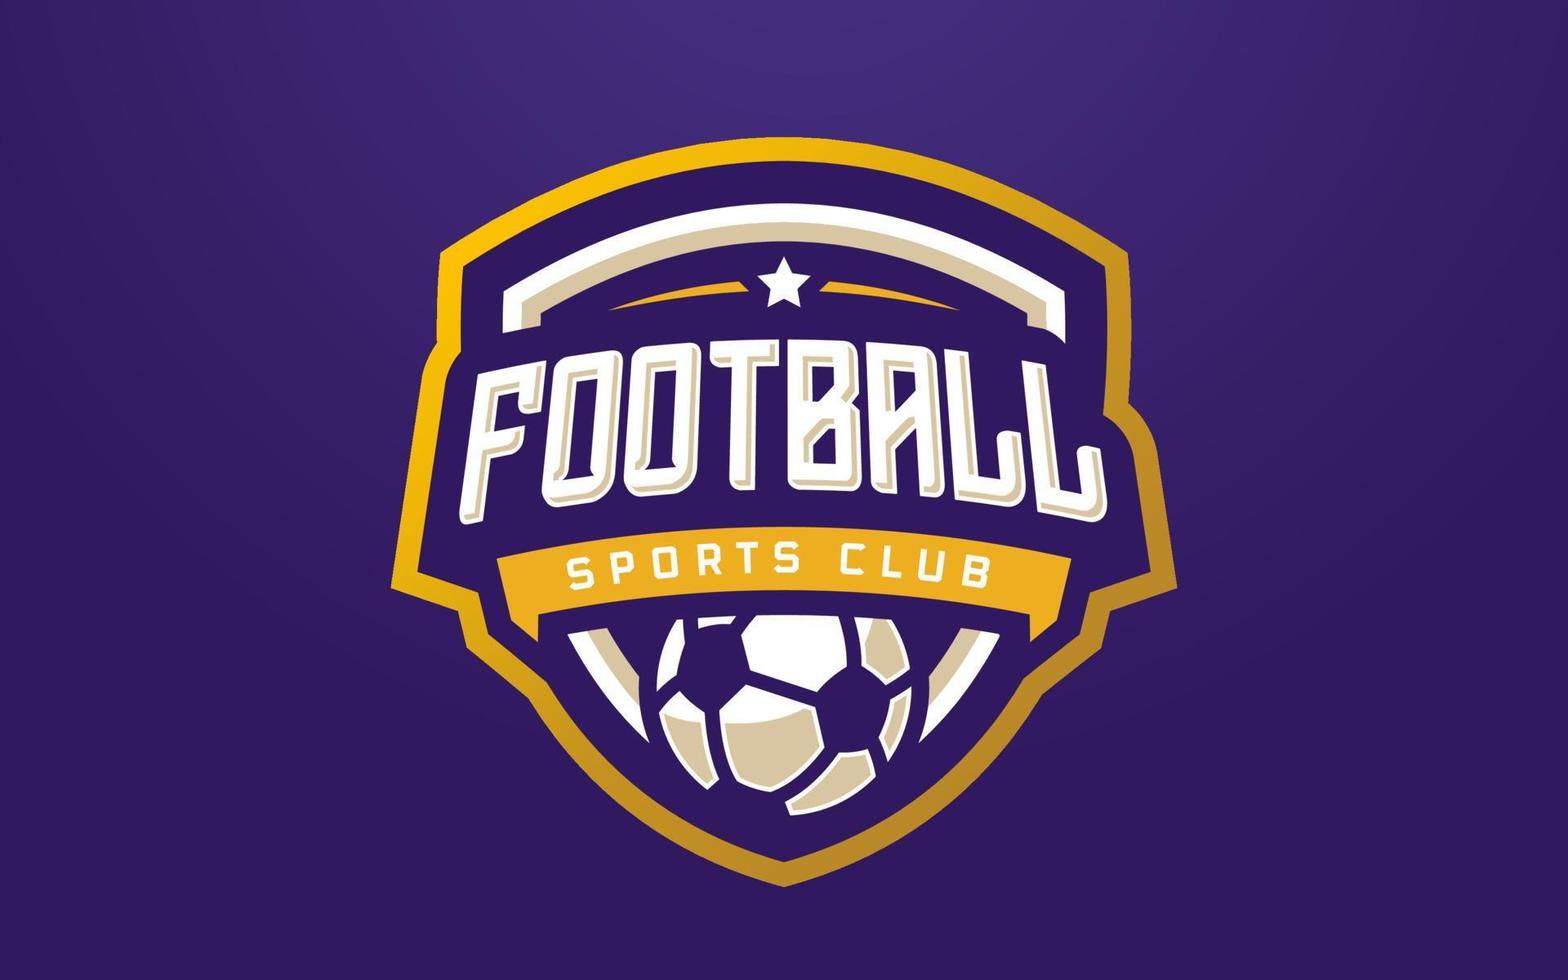 voetbalclub logo sjabloon voor sportteam en toernooi vector